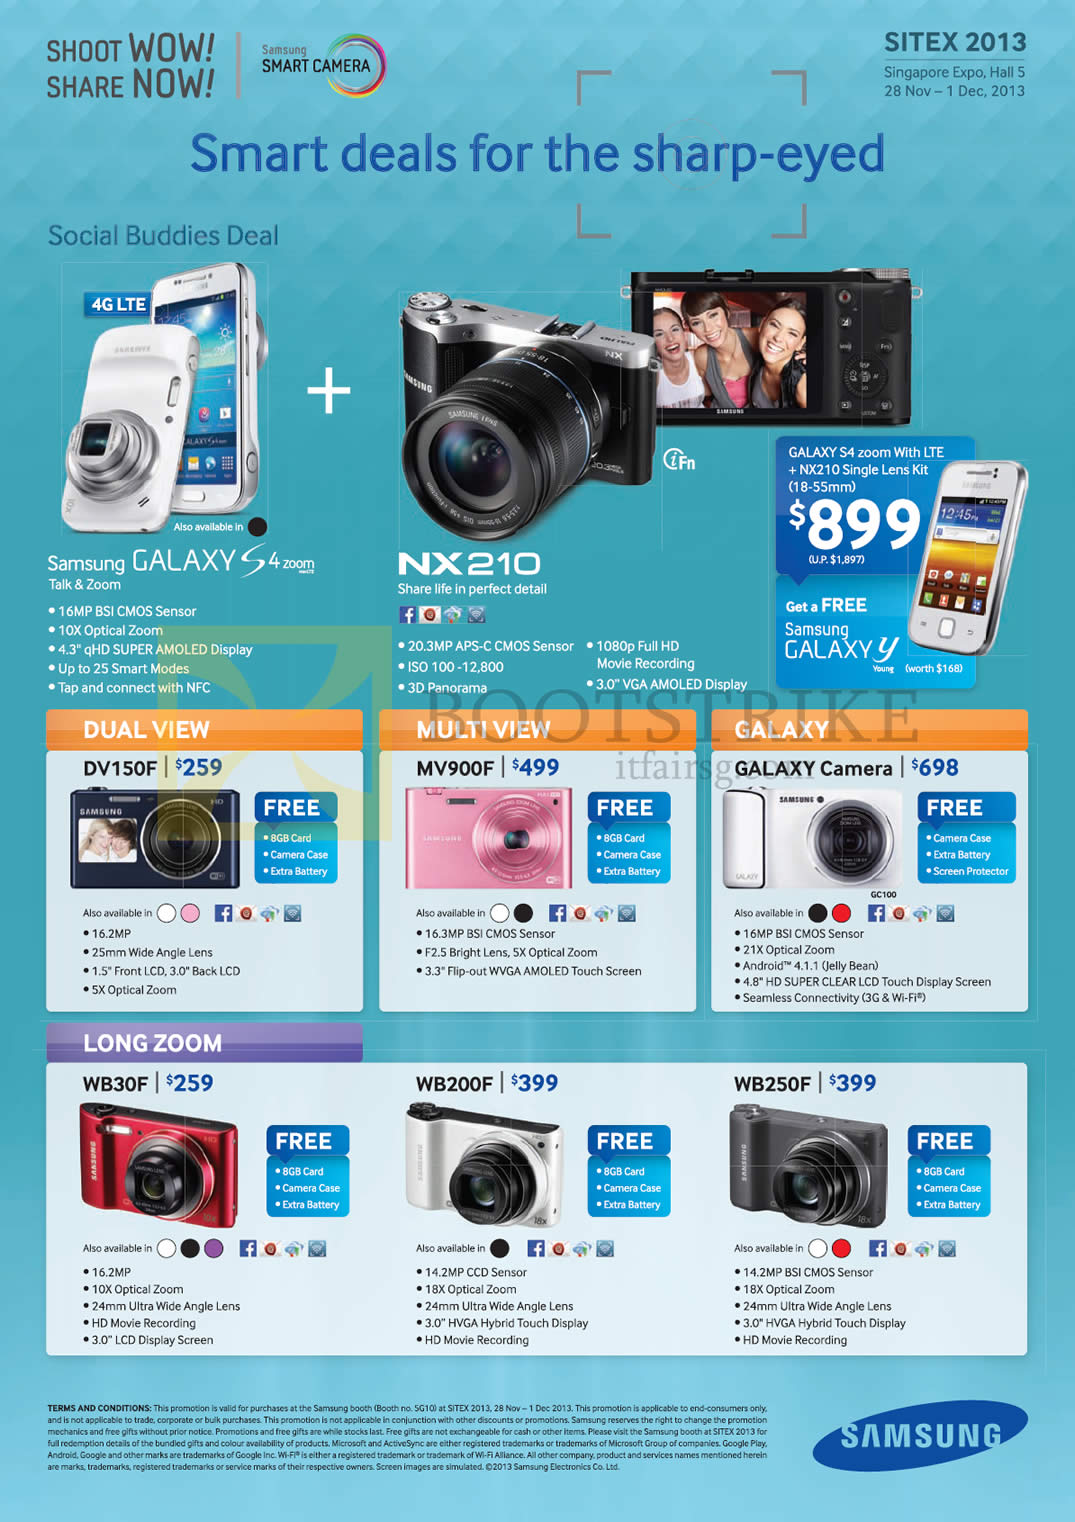 SITEX 2013 price list image brochure of Samsung Digital Cameras Galaxy S4 Zoom, NX210, DV150F, MV900F, Galaxy Camera, WB30F, WB200F, WB250F